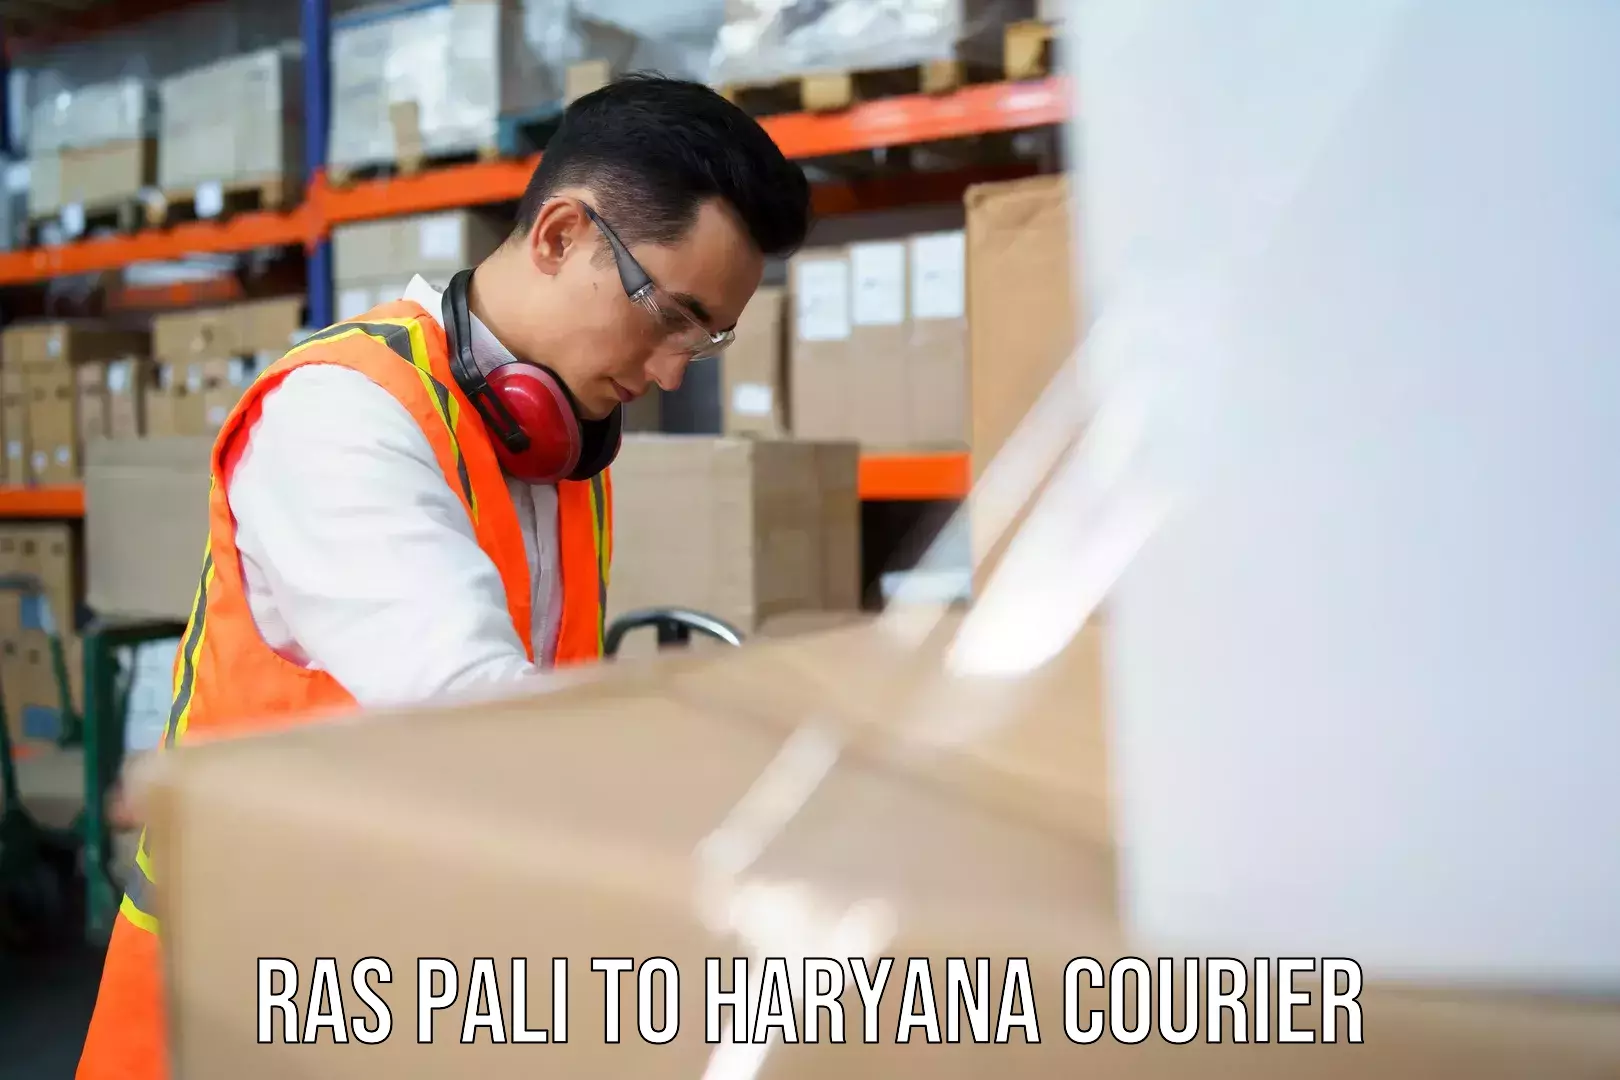 Digital courier platforms Ras Pali to Haryana